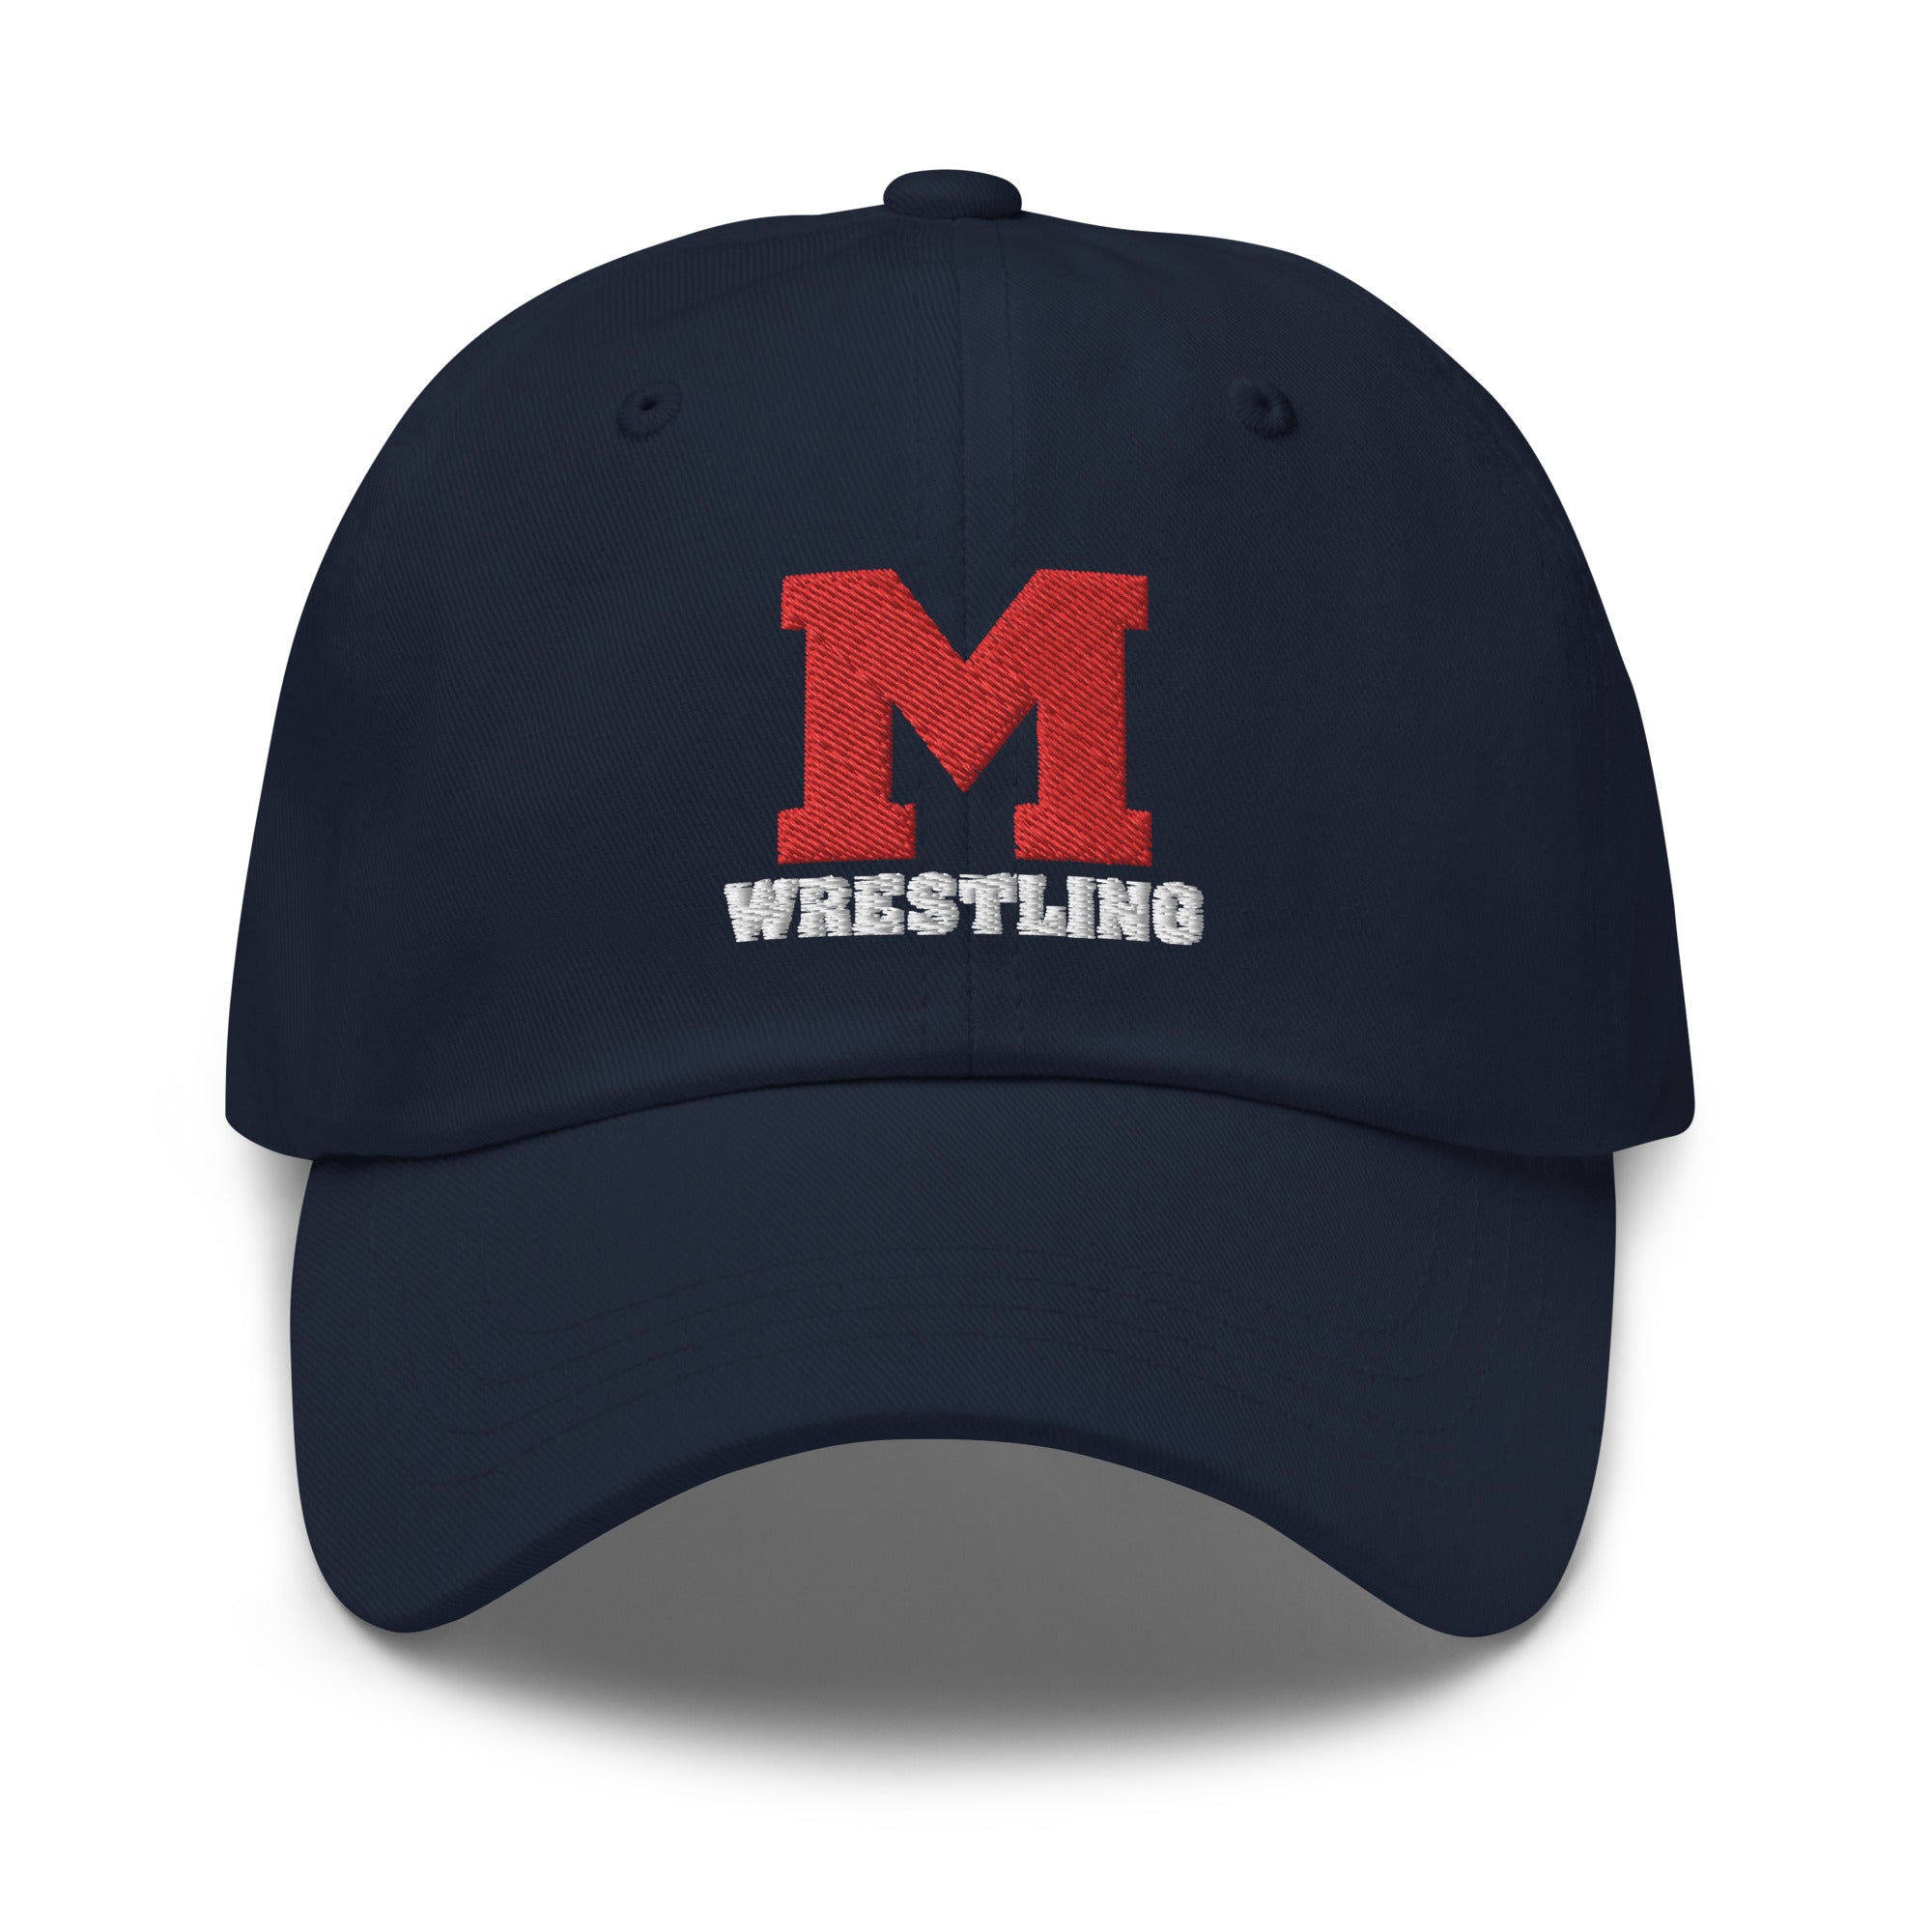 M Wrestling Dad hat